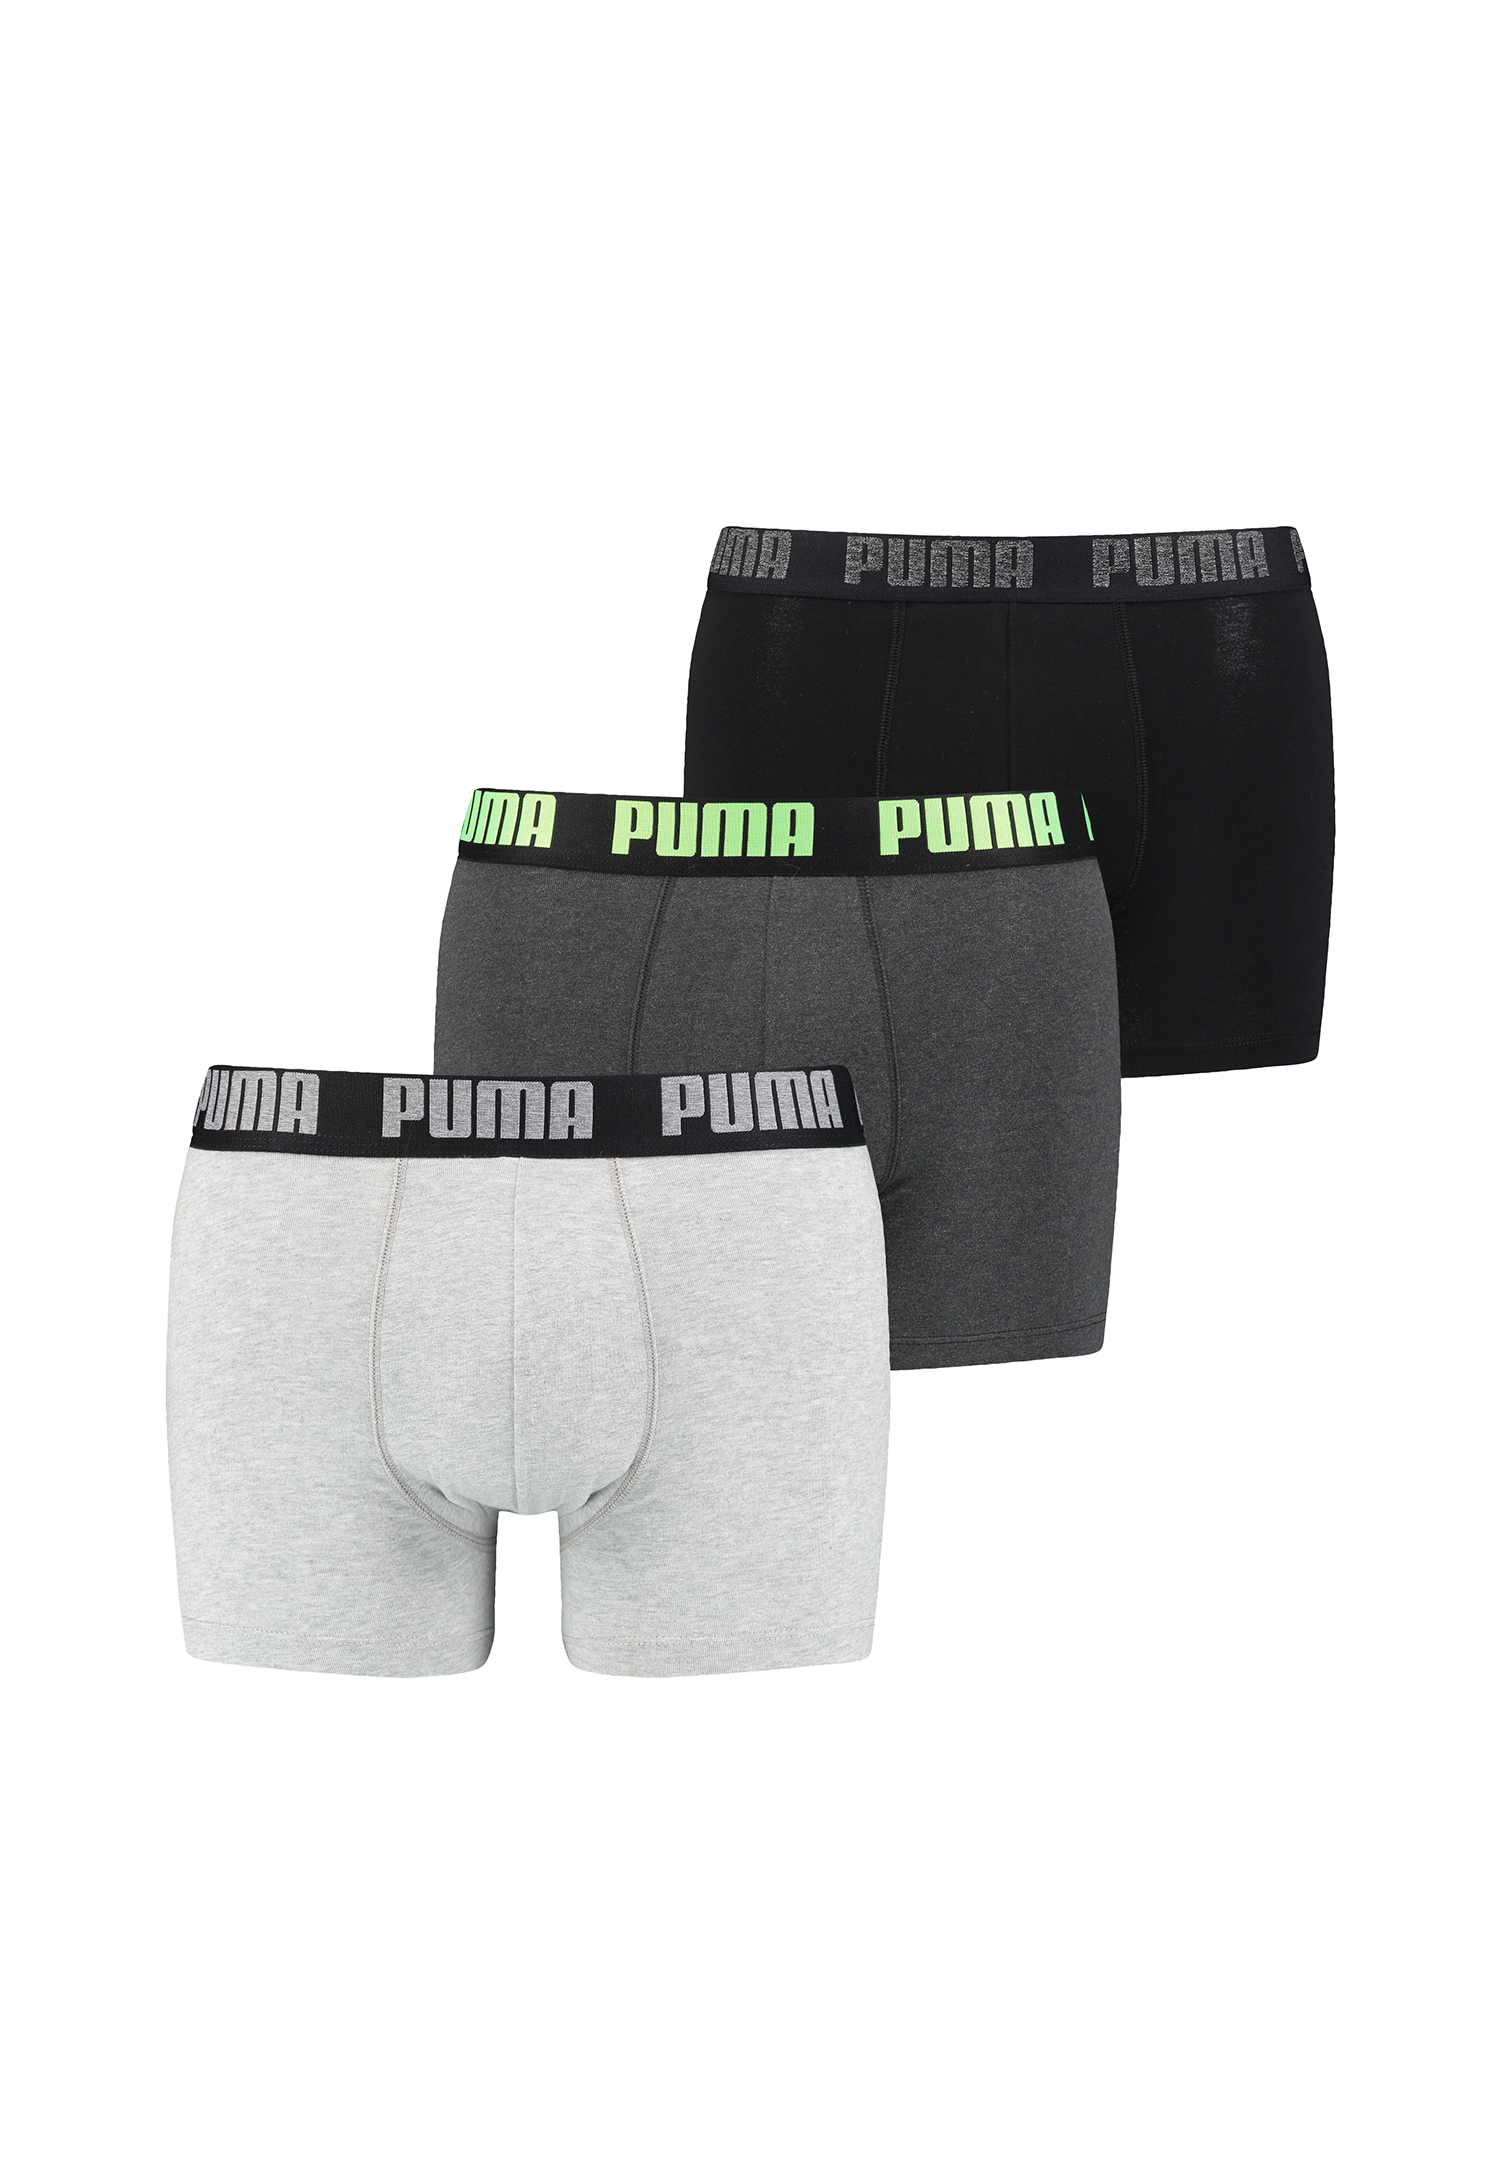 Puma Herren Cat Boxer Shorts Everyday Unterhose Pant Unterwäsche 3 er Pack